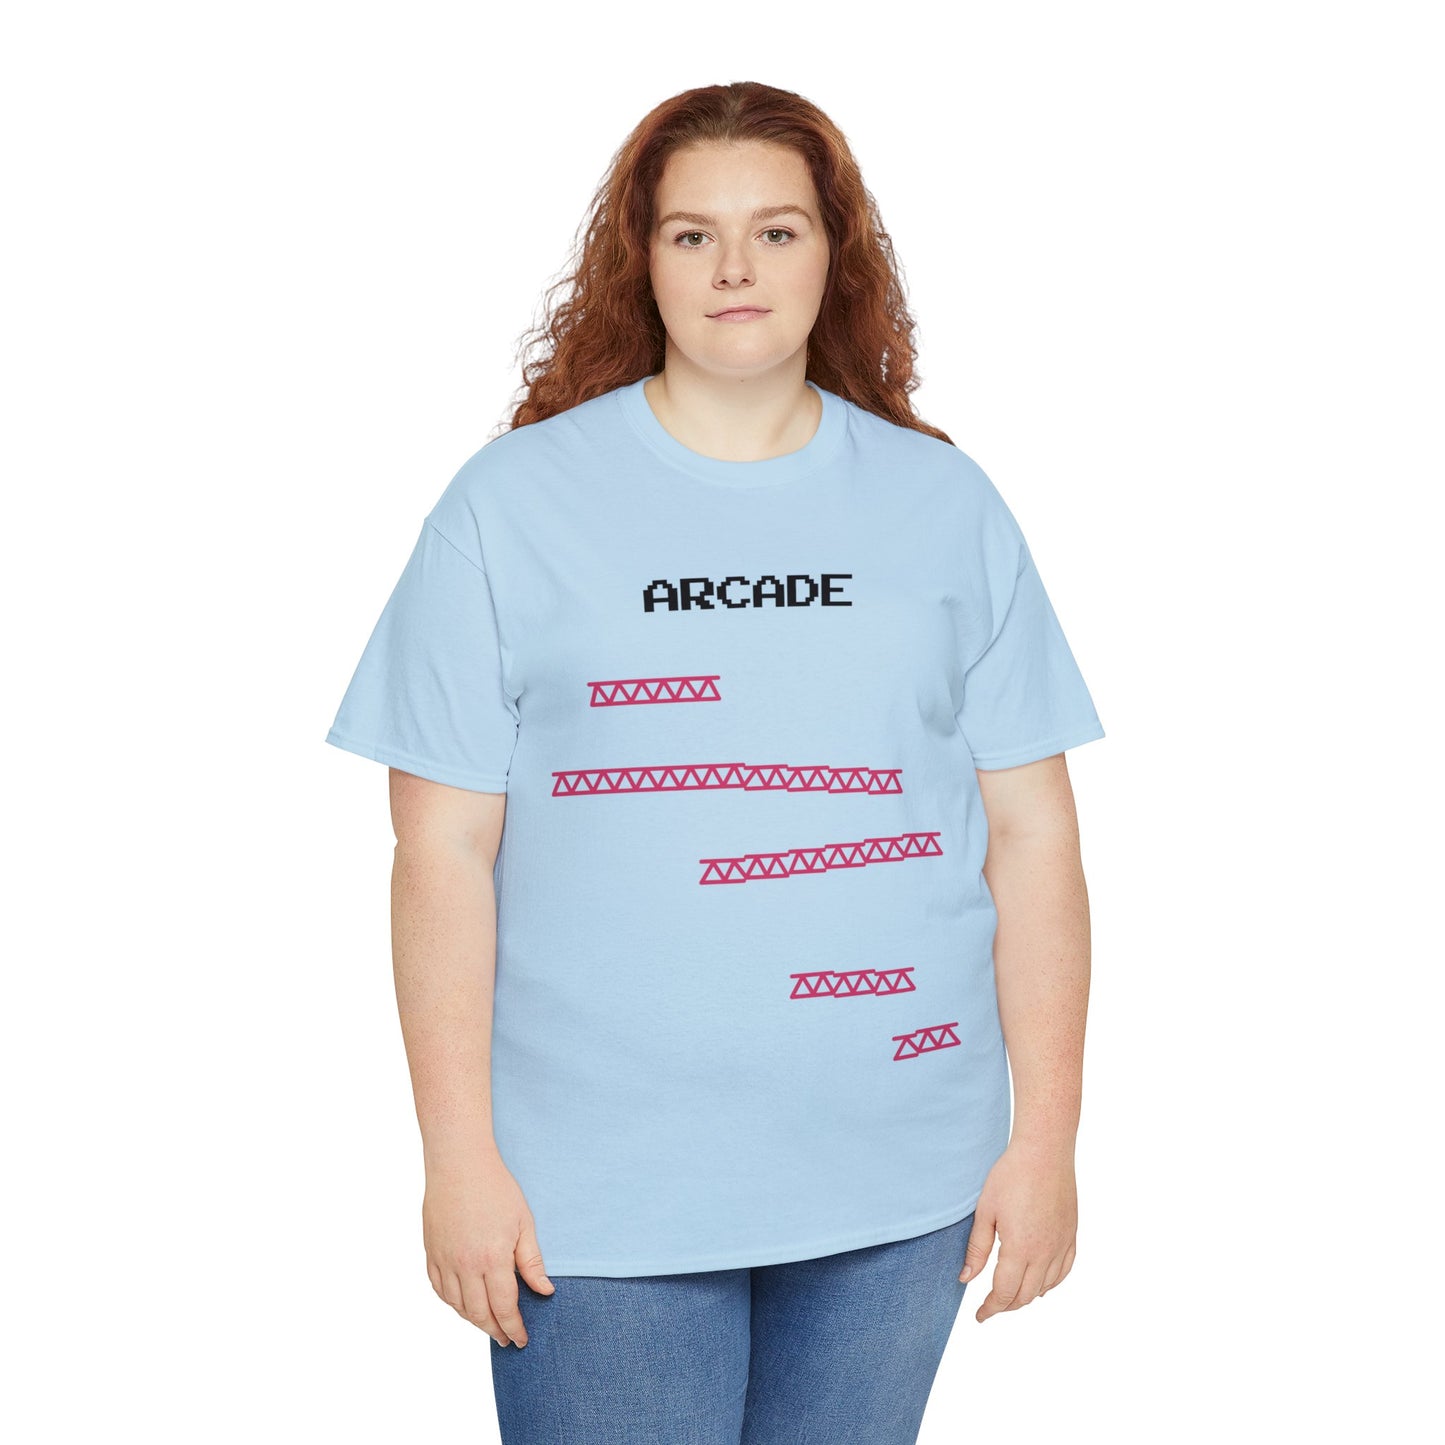 ARCADE. (educational t-shirt)